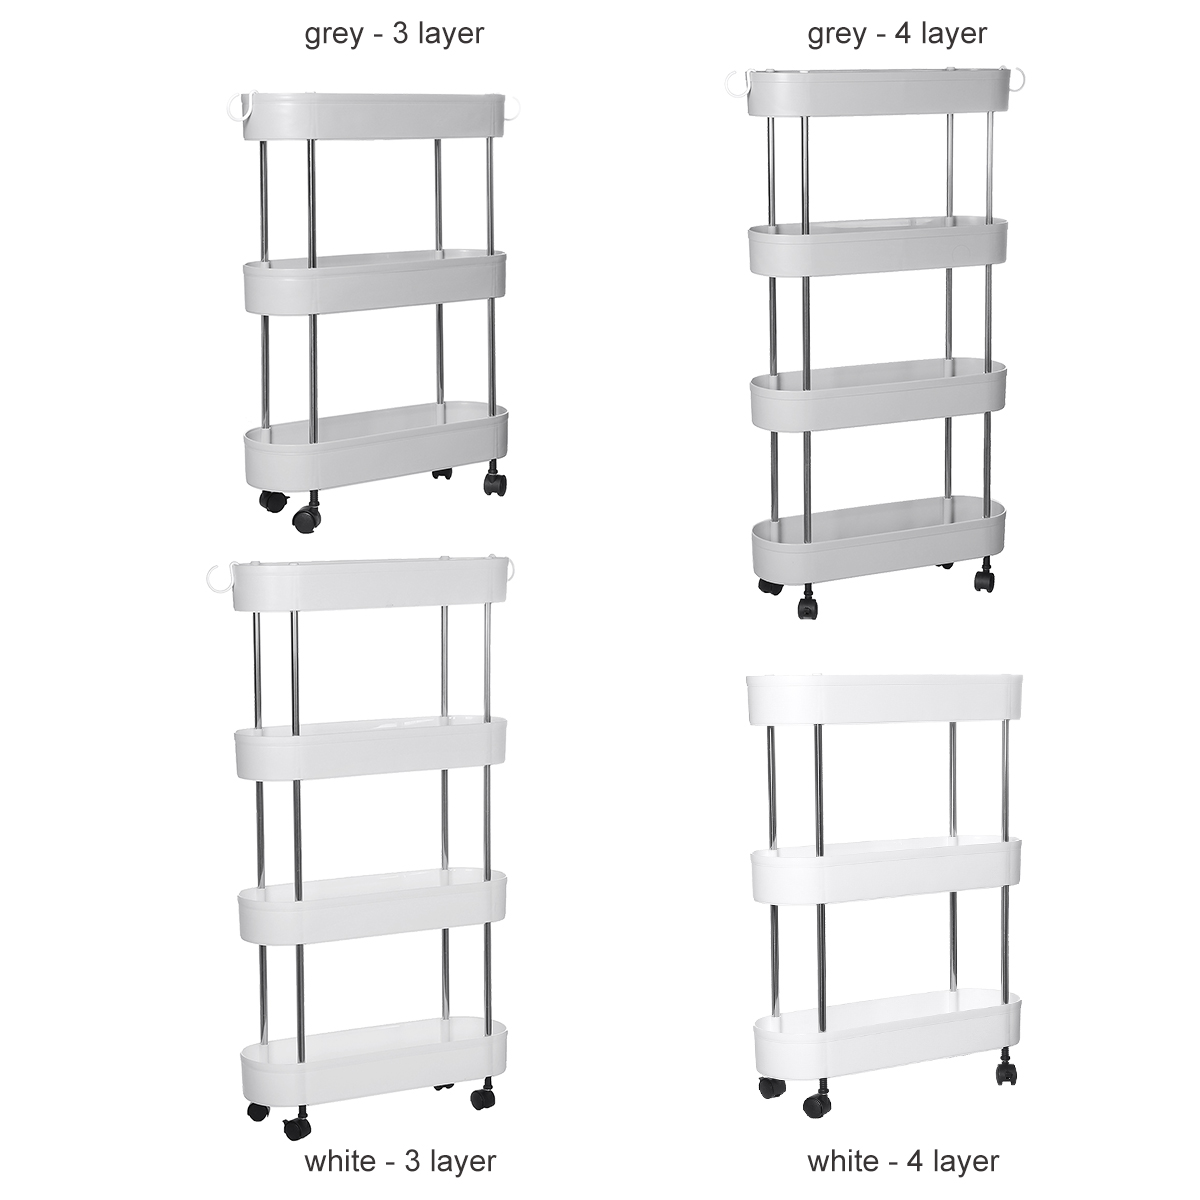 34-Layers-Slim-Storage-Cart-Mobile-Shelving-Unit-Organizer-Slide-Out-Storage-Rolling-Utility-Cart-Ra-1828344-8